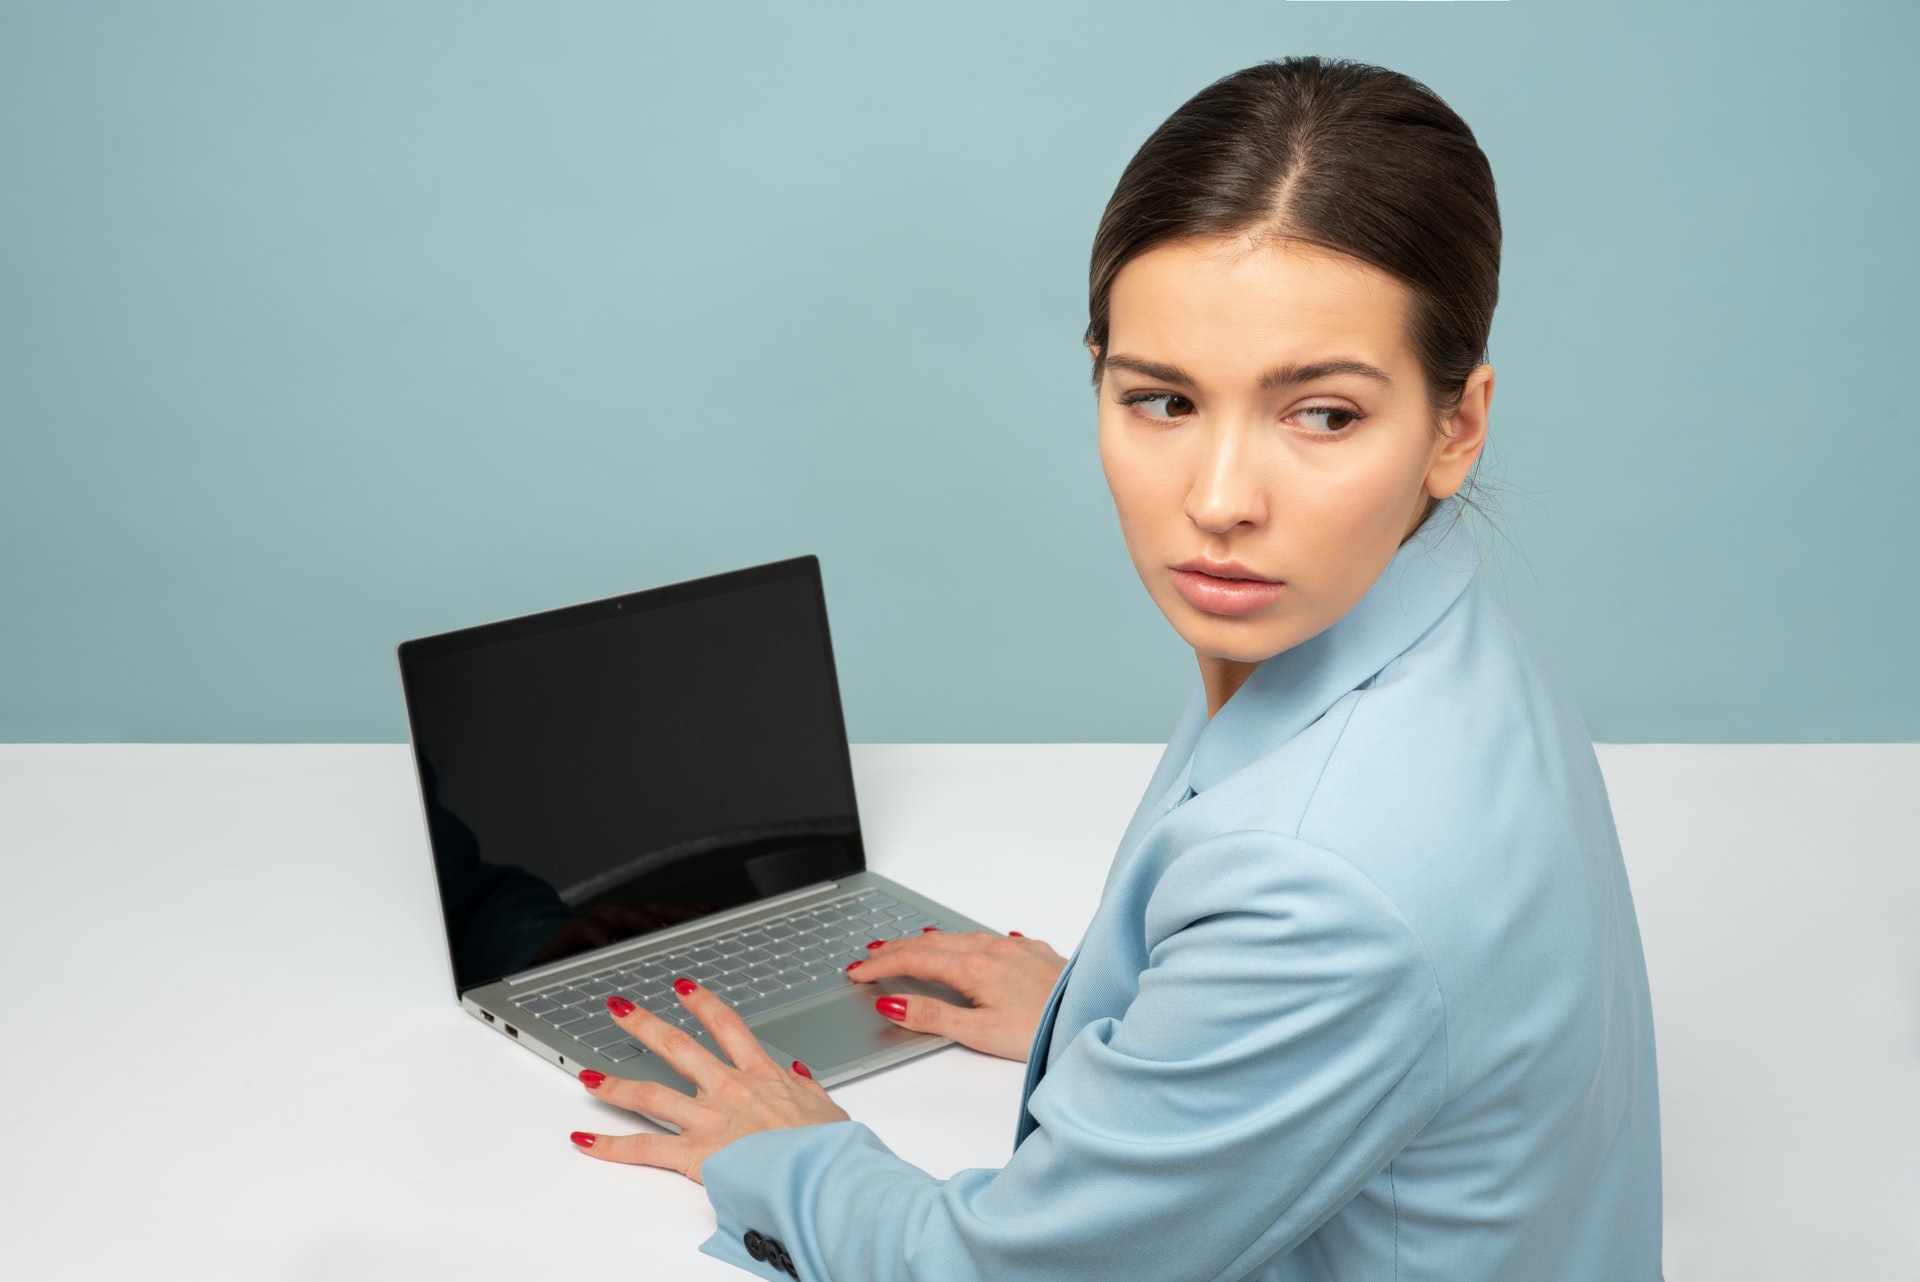 žena u počítače se strachy otáčí na svého šéfa